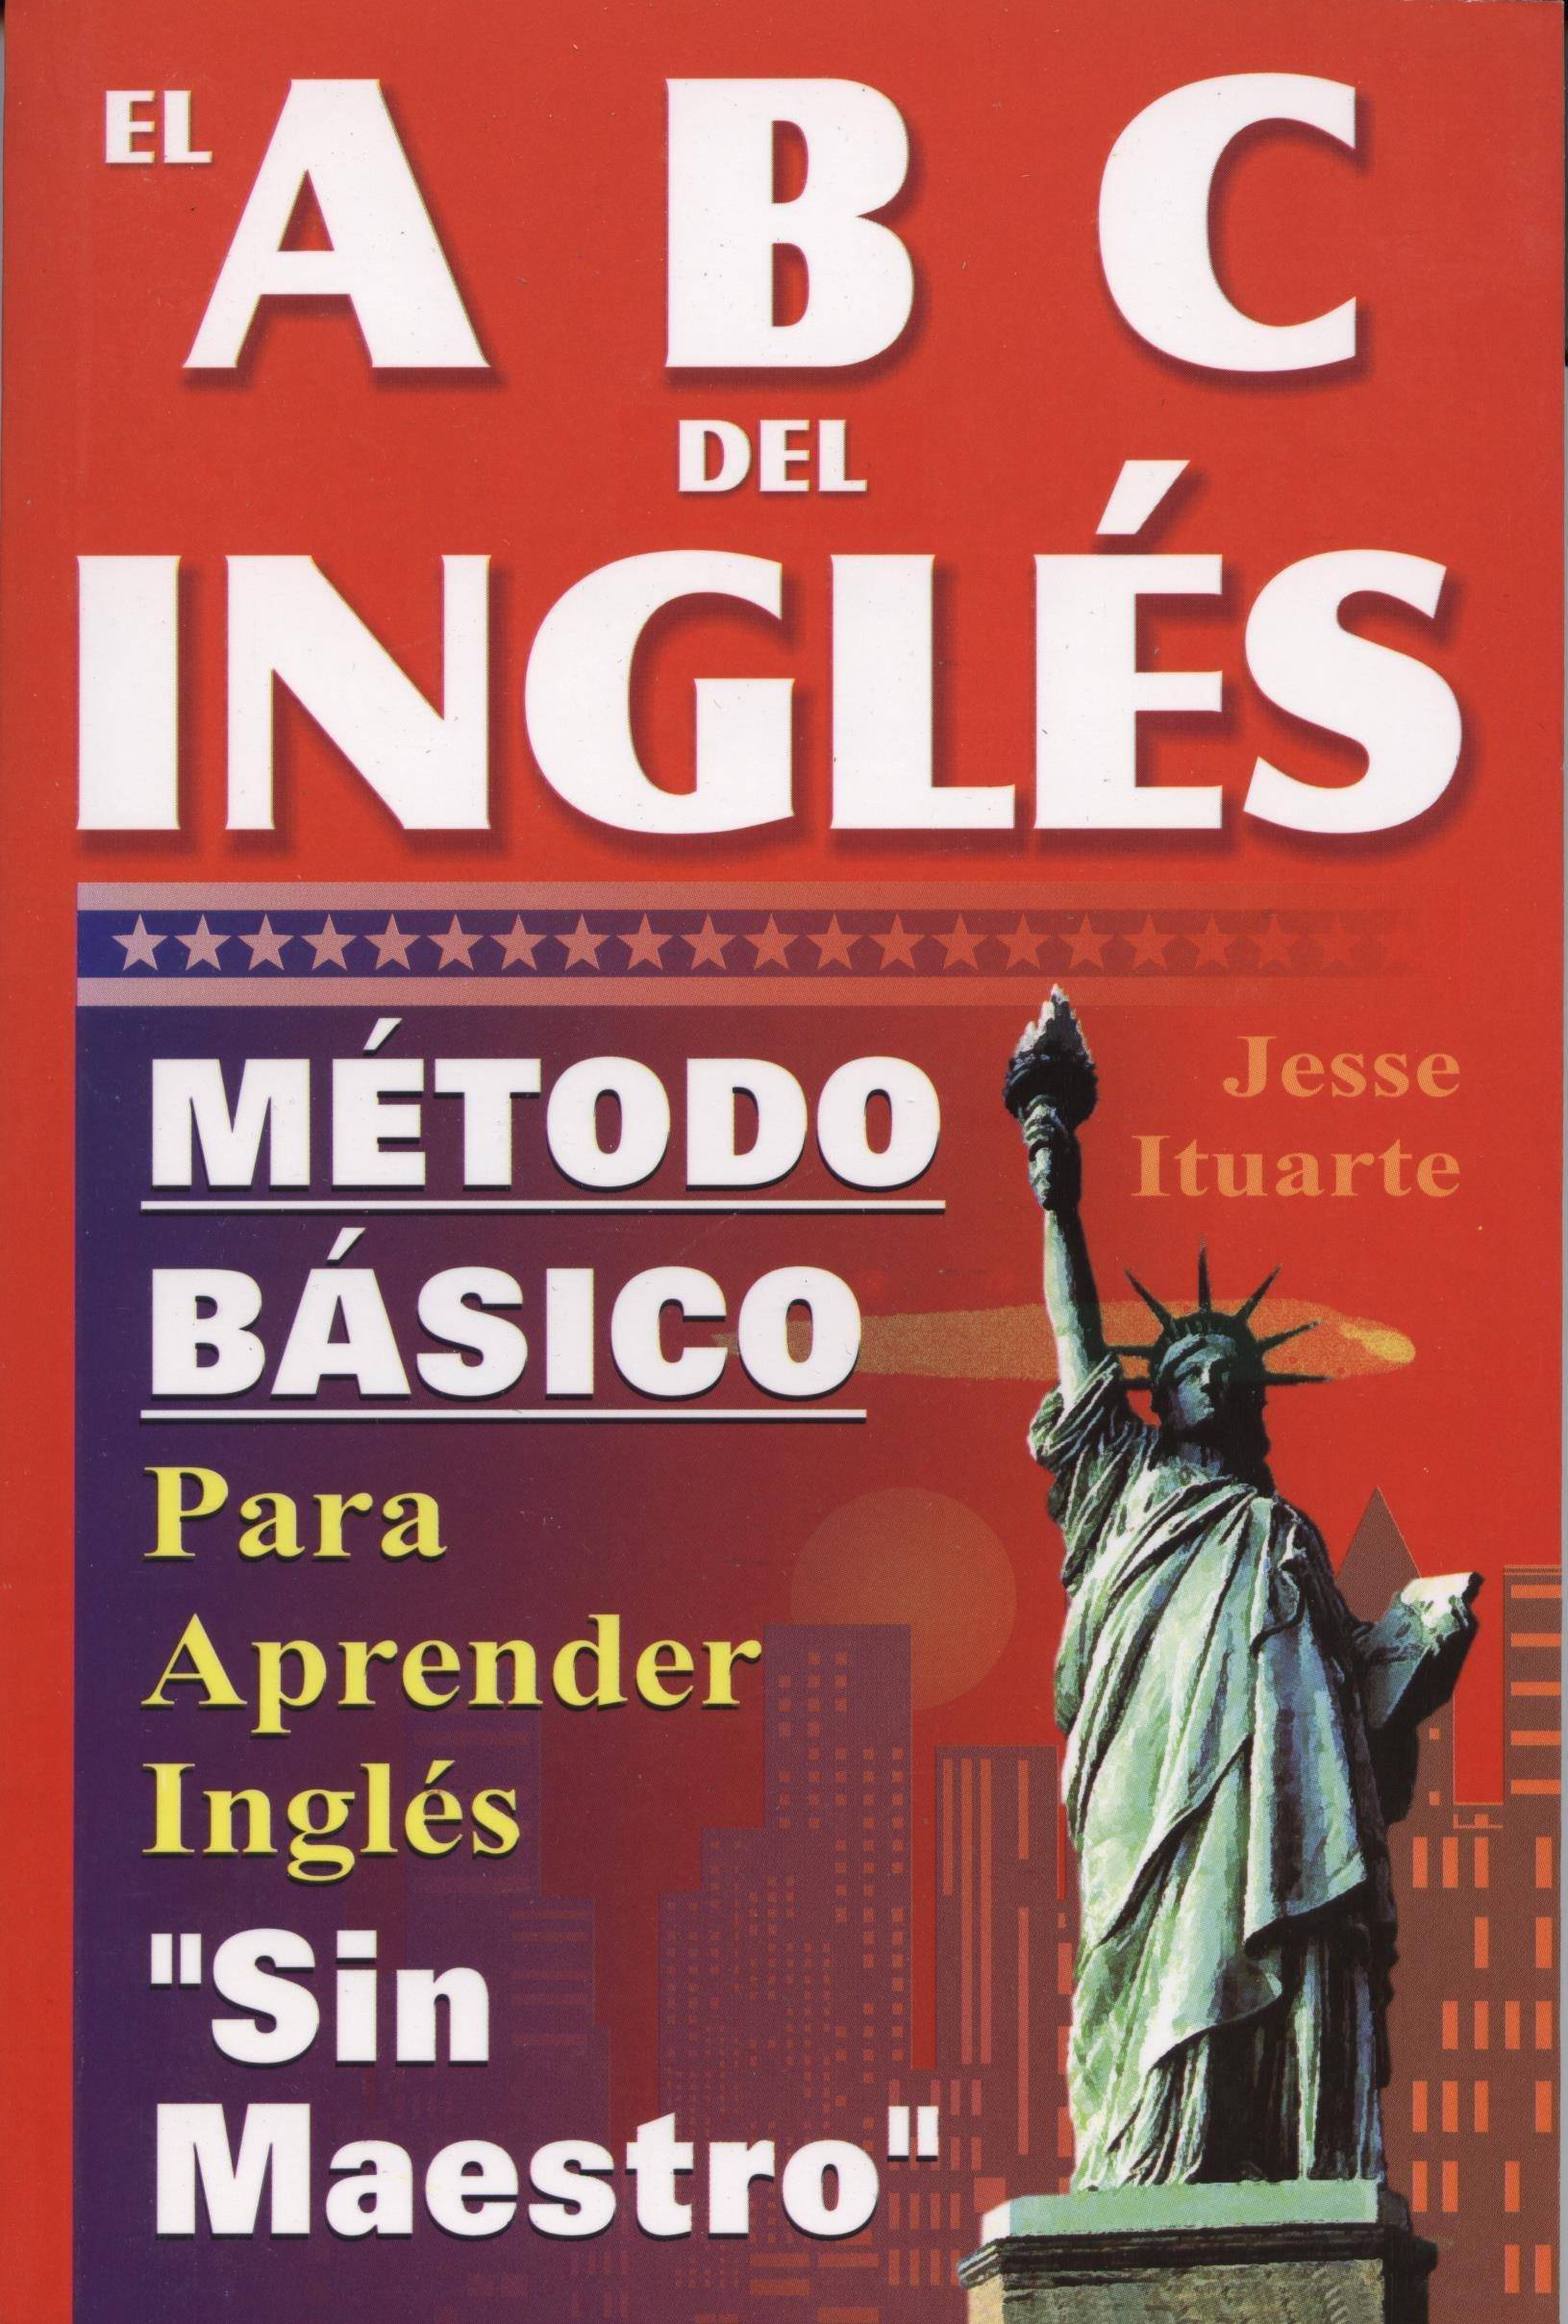 El ABC del Ingles: Maetodo Baasico Para Aprender Inglaes Sin Mae - SureShot Books Publishing LLC